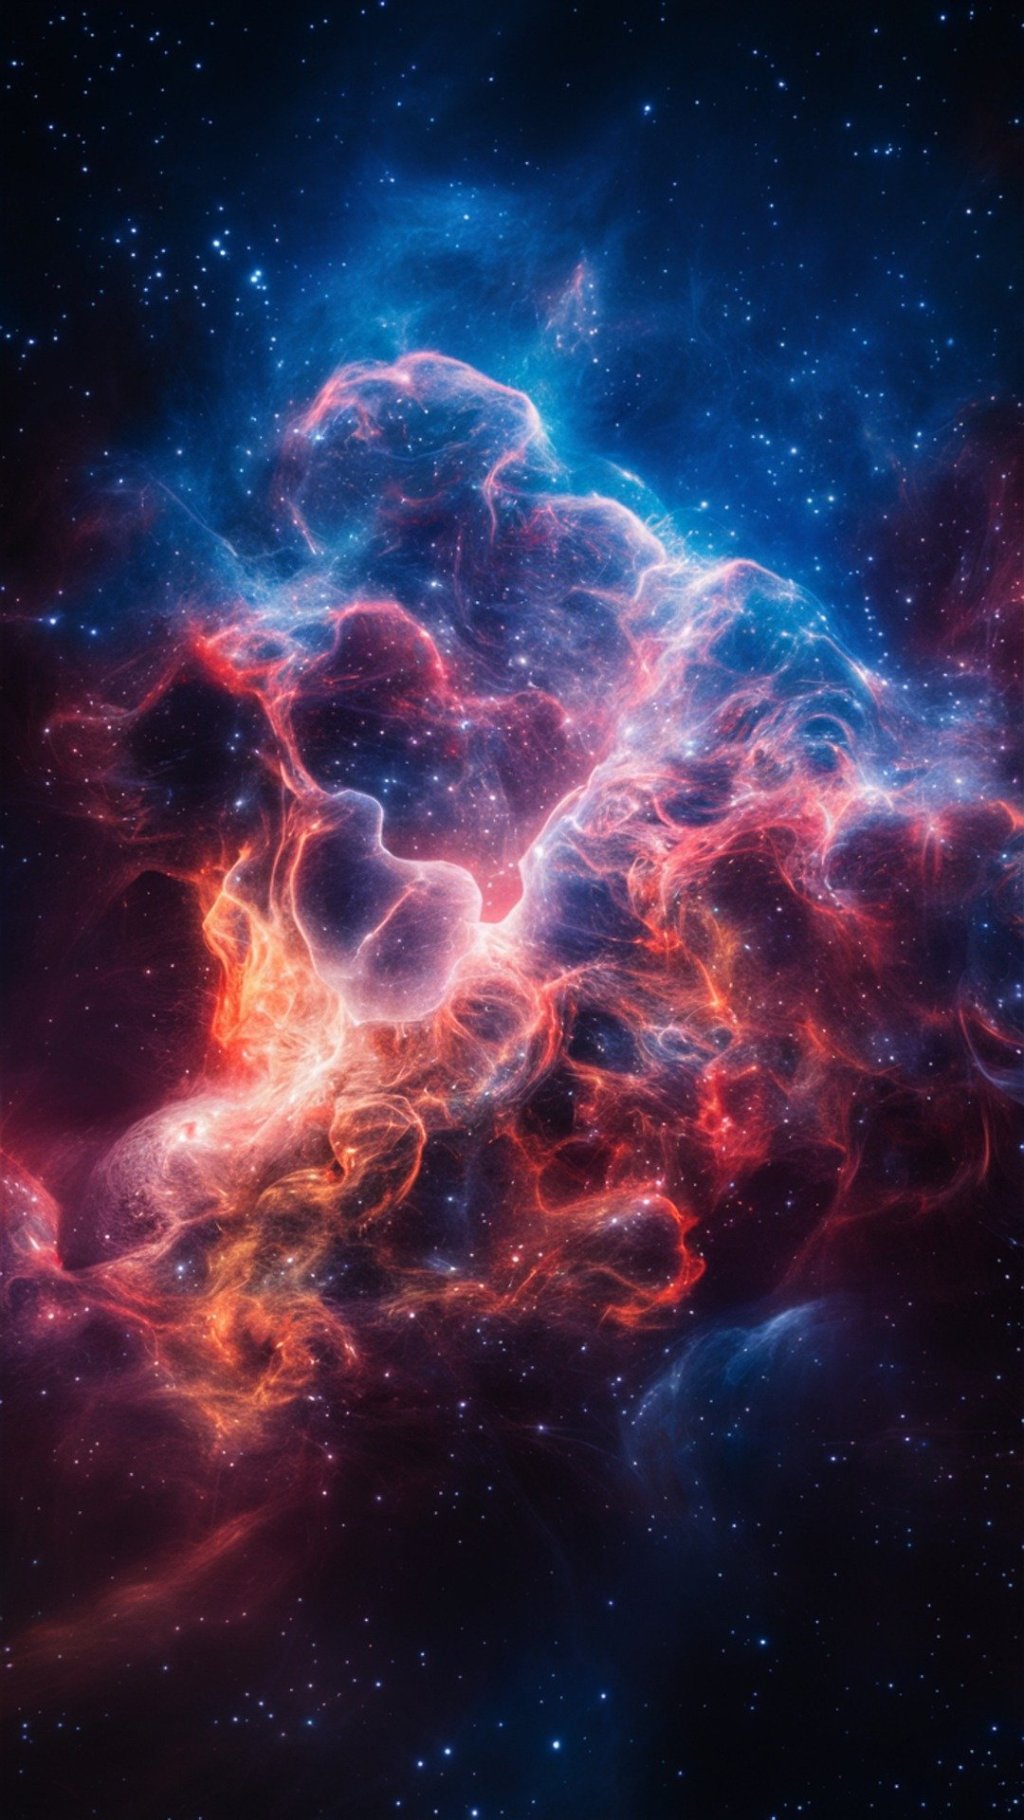 Galactic zoo: 7 nebulae that look like animals